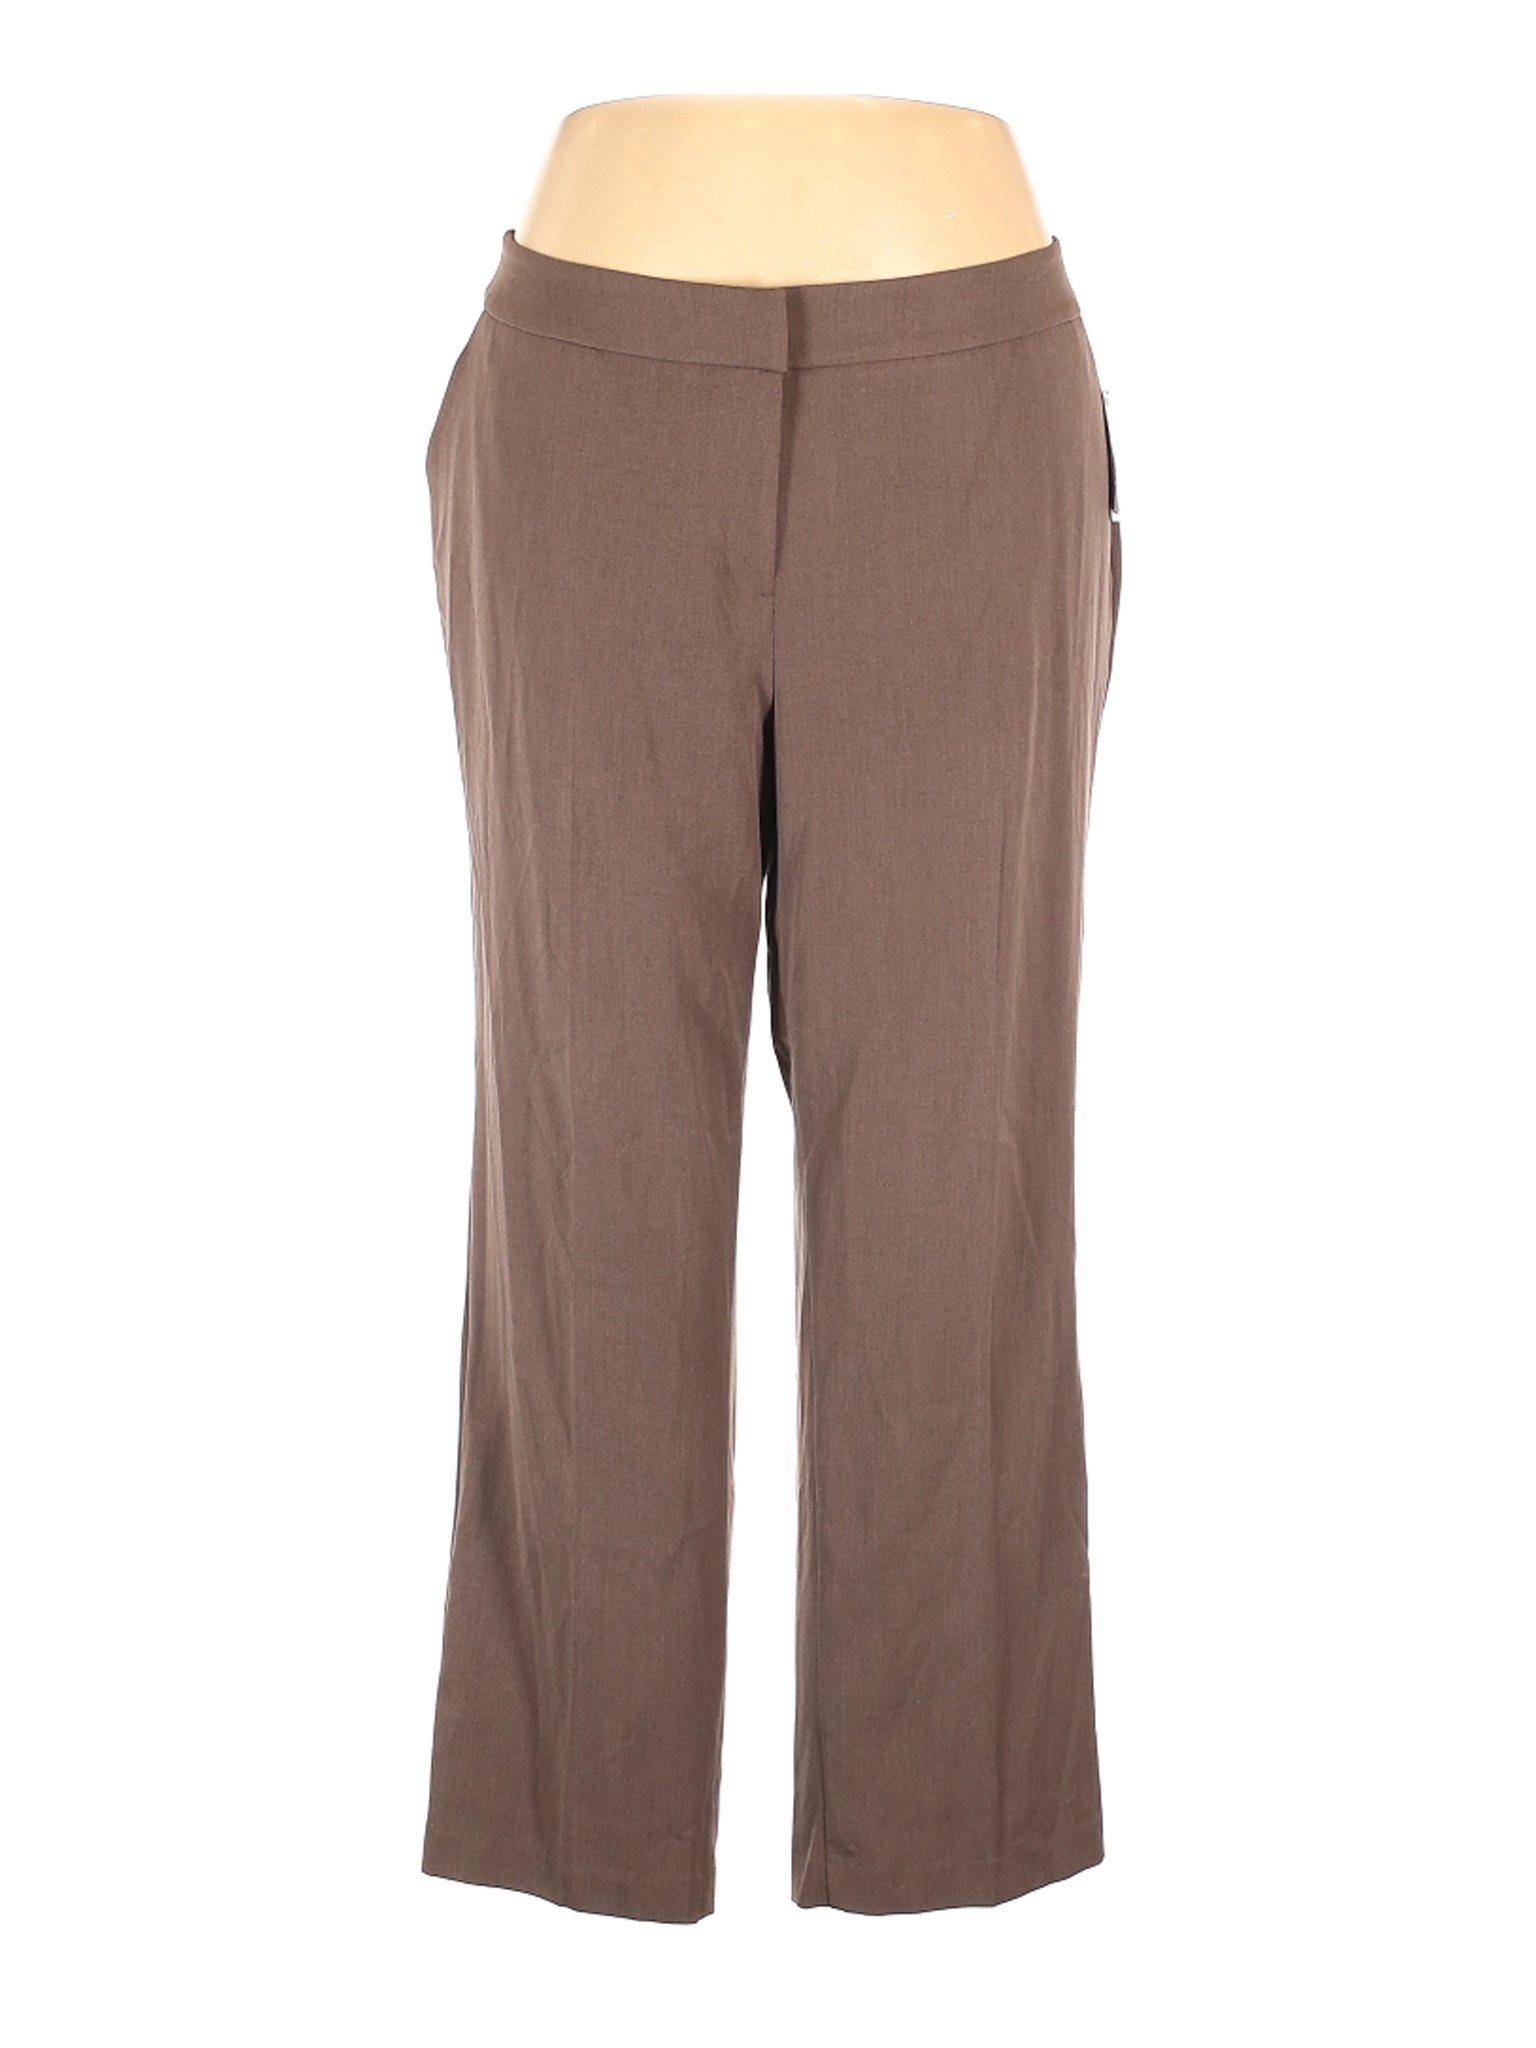 NWT Investments II Women Brown Dress Pants 24 Plus | eBay